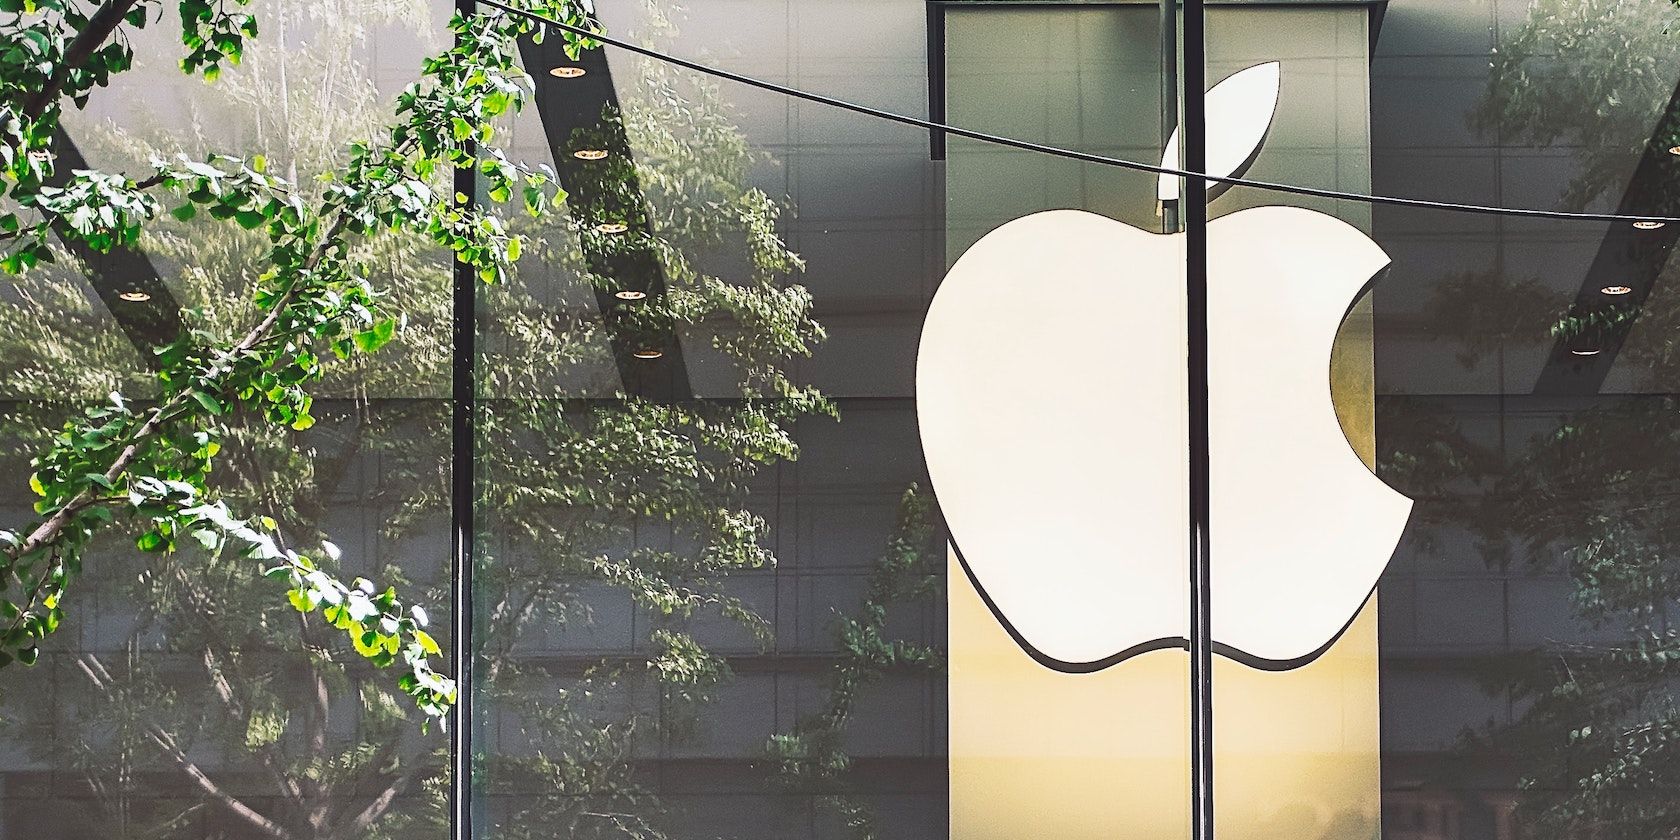 apple logo behind glass window